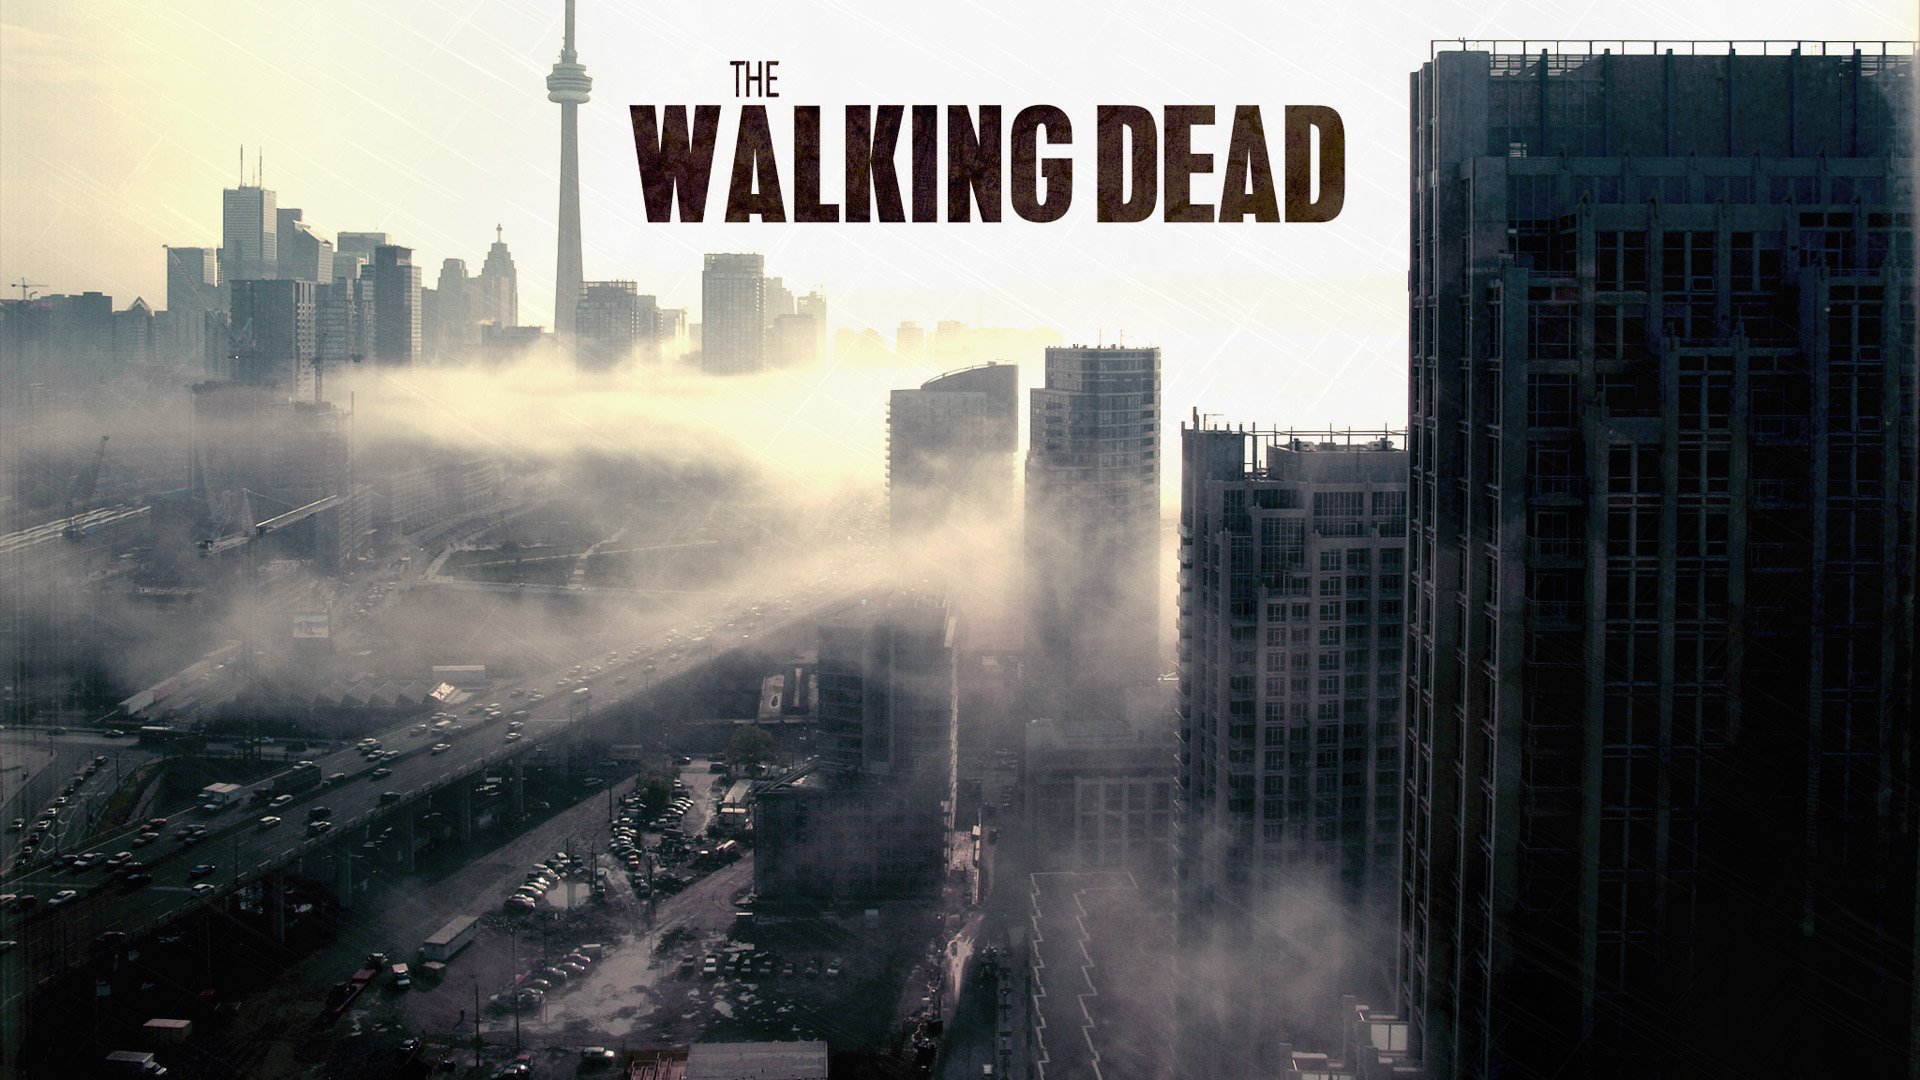 The Walking Dead Dark Horror Zombie Series Apocalyptic